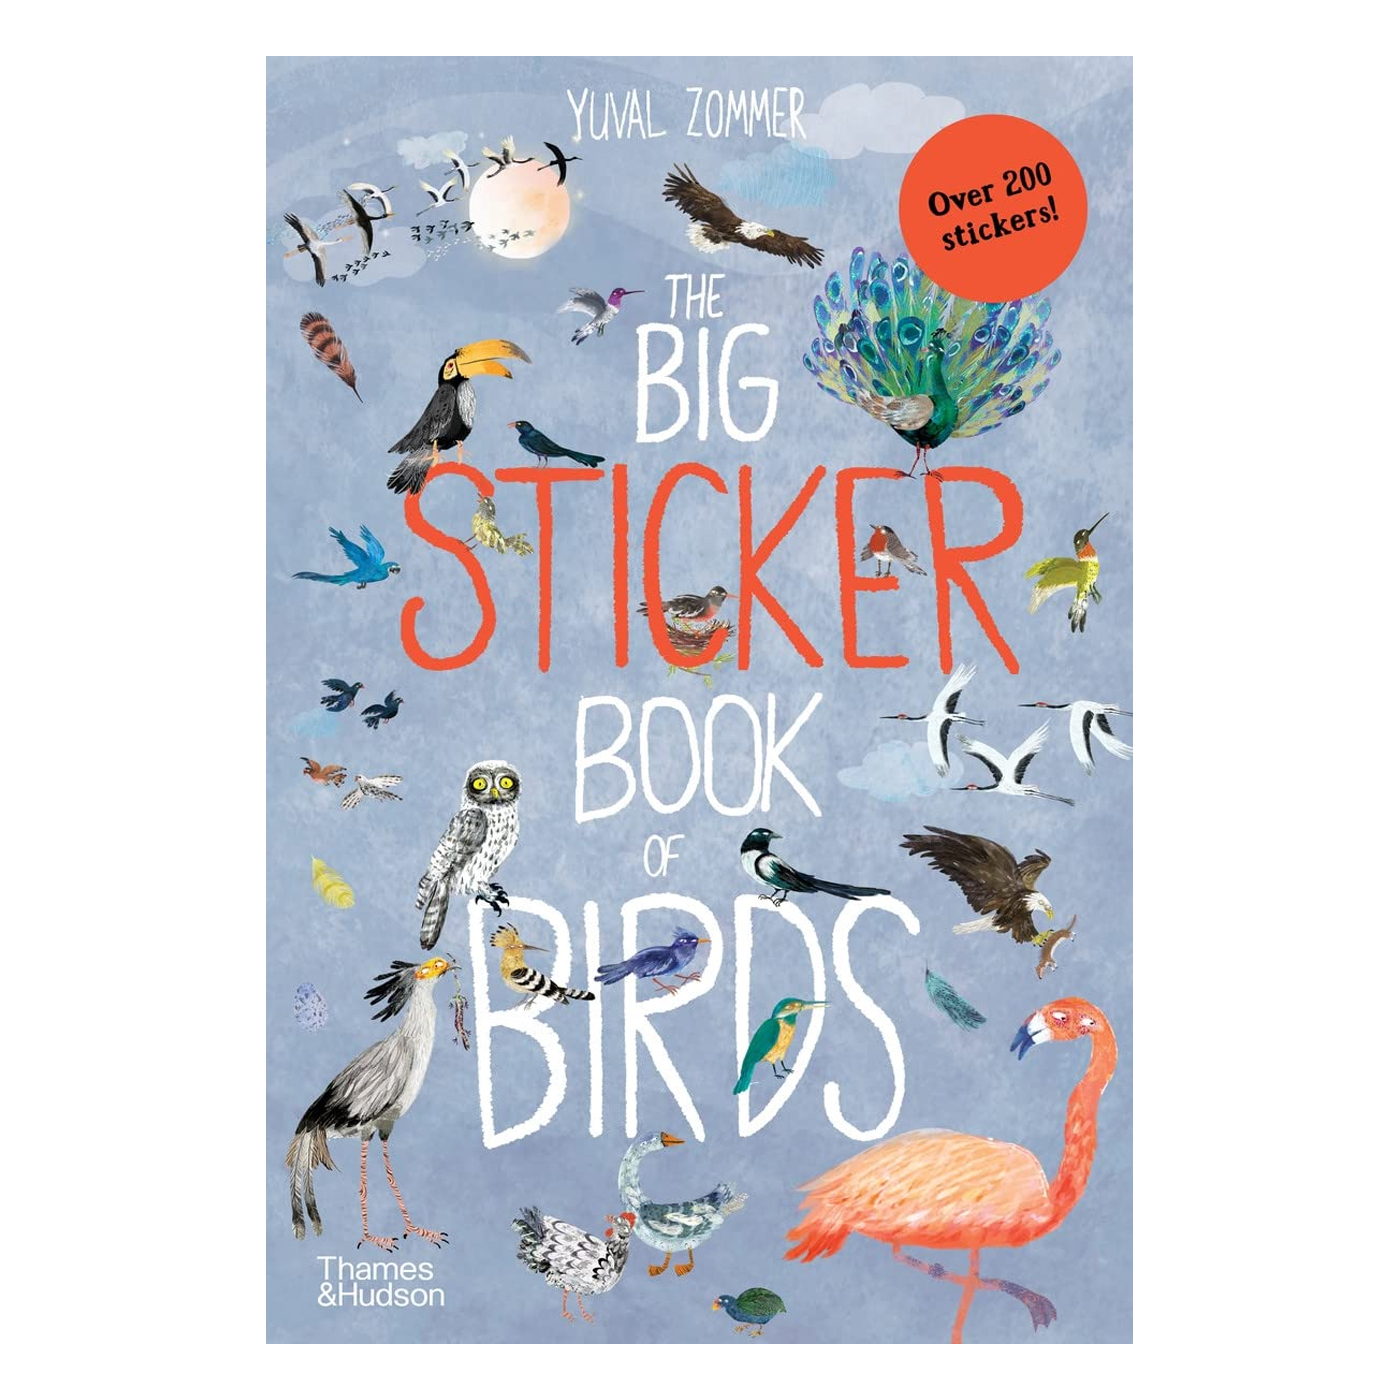  The Big Sticker Book of Birds